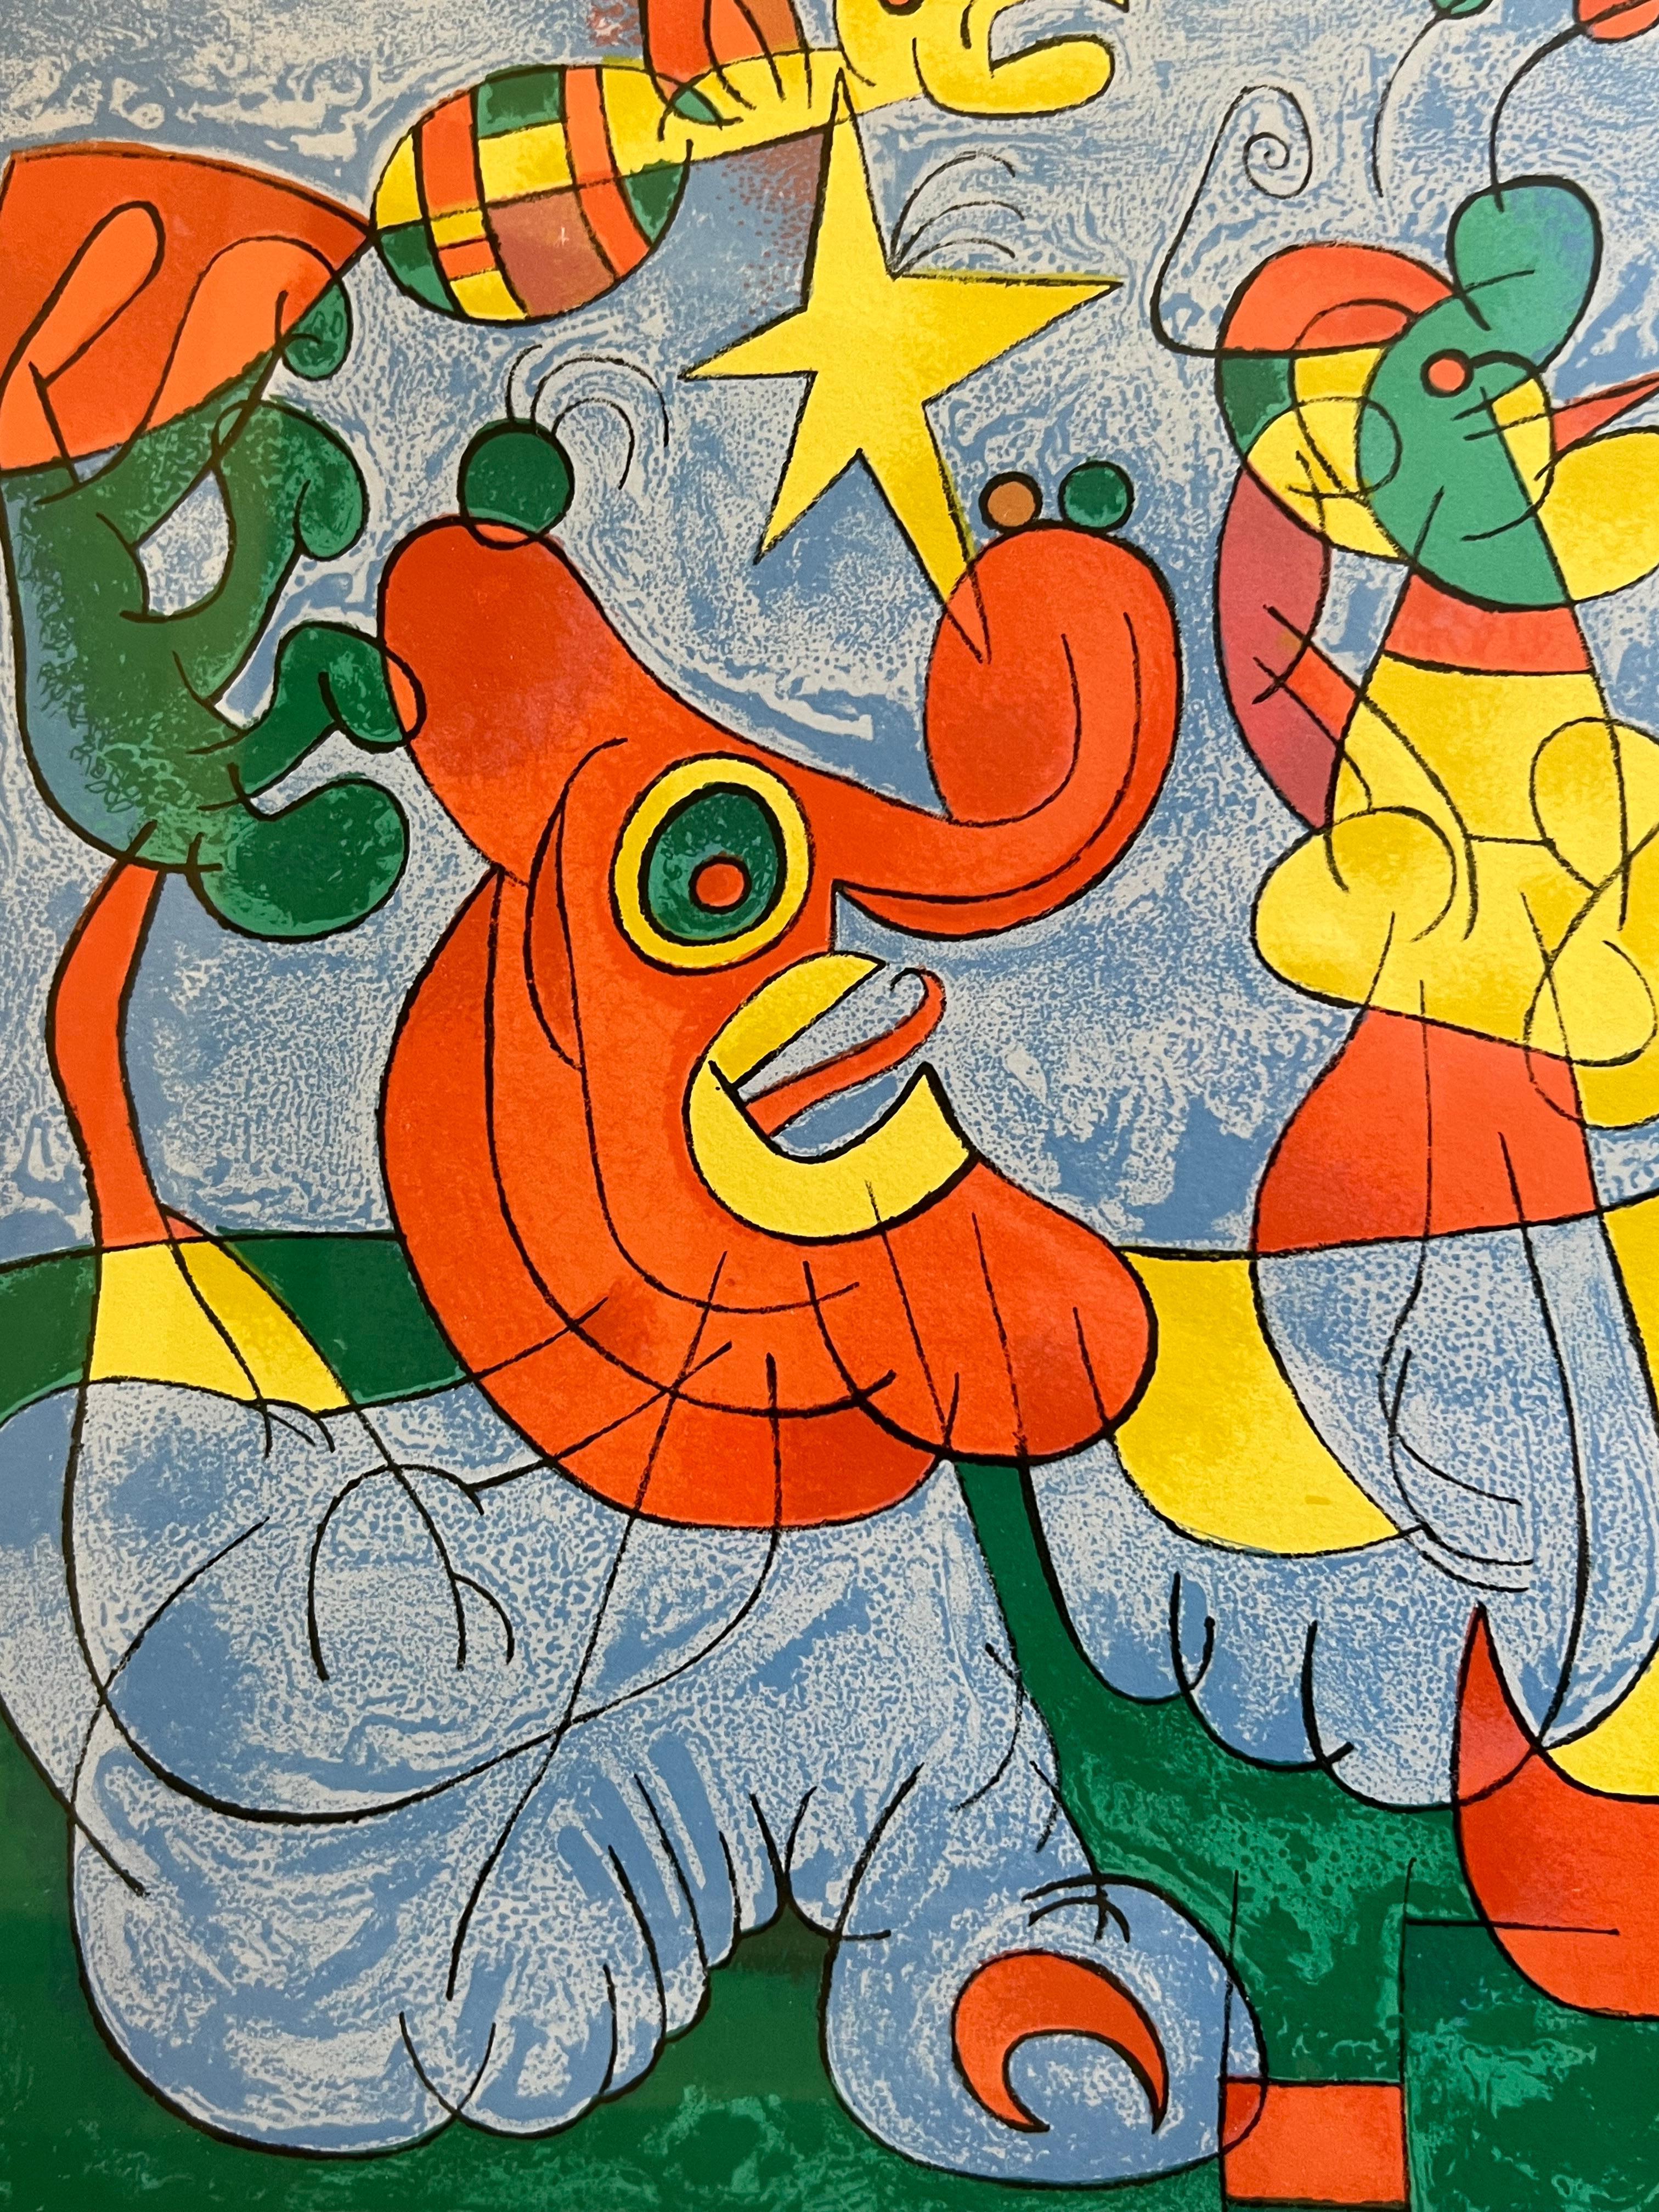 Große 1966 SURREAL Joan Miro Ubu roi (King Ubu): Platte 3 LITHOGRAPH farbig lackiert (Surrealismus), Print, von Joan Miró